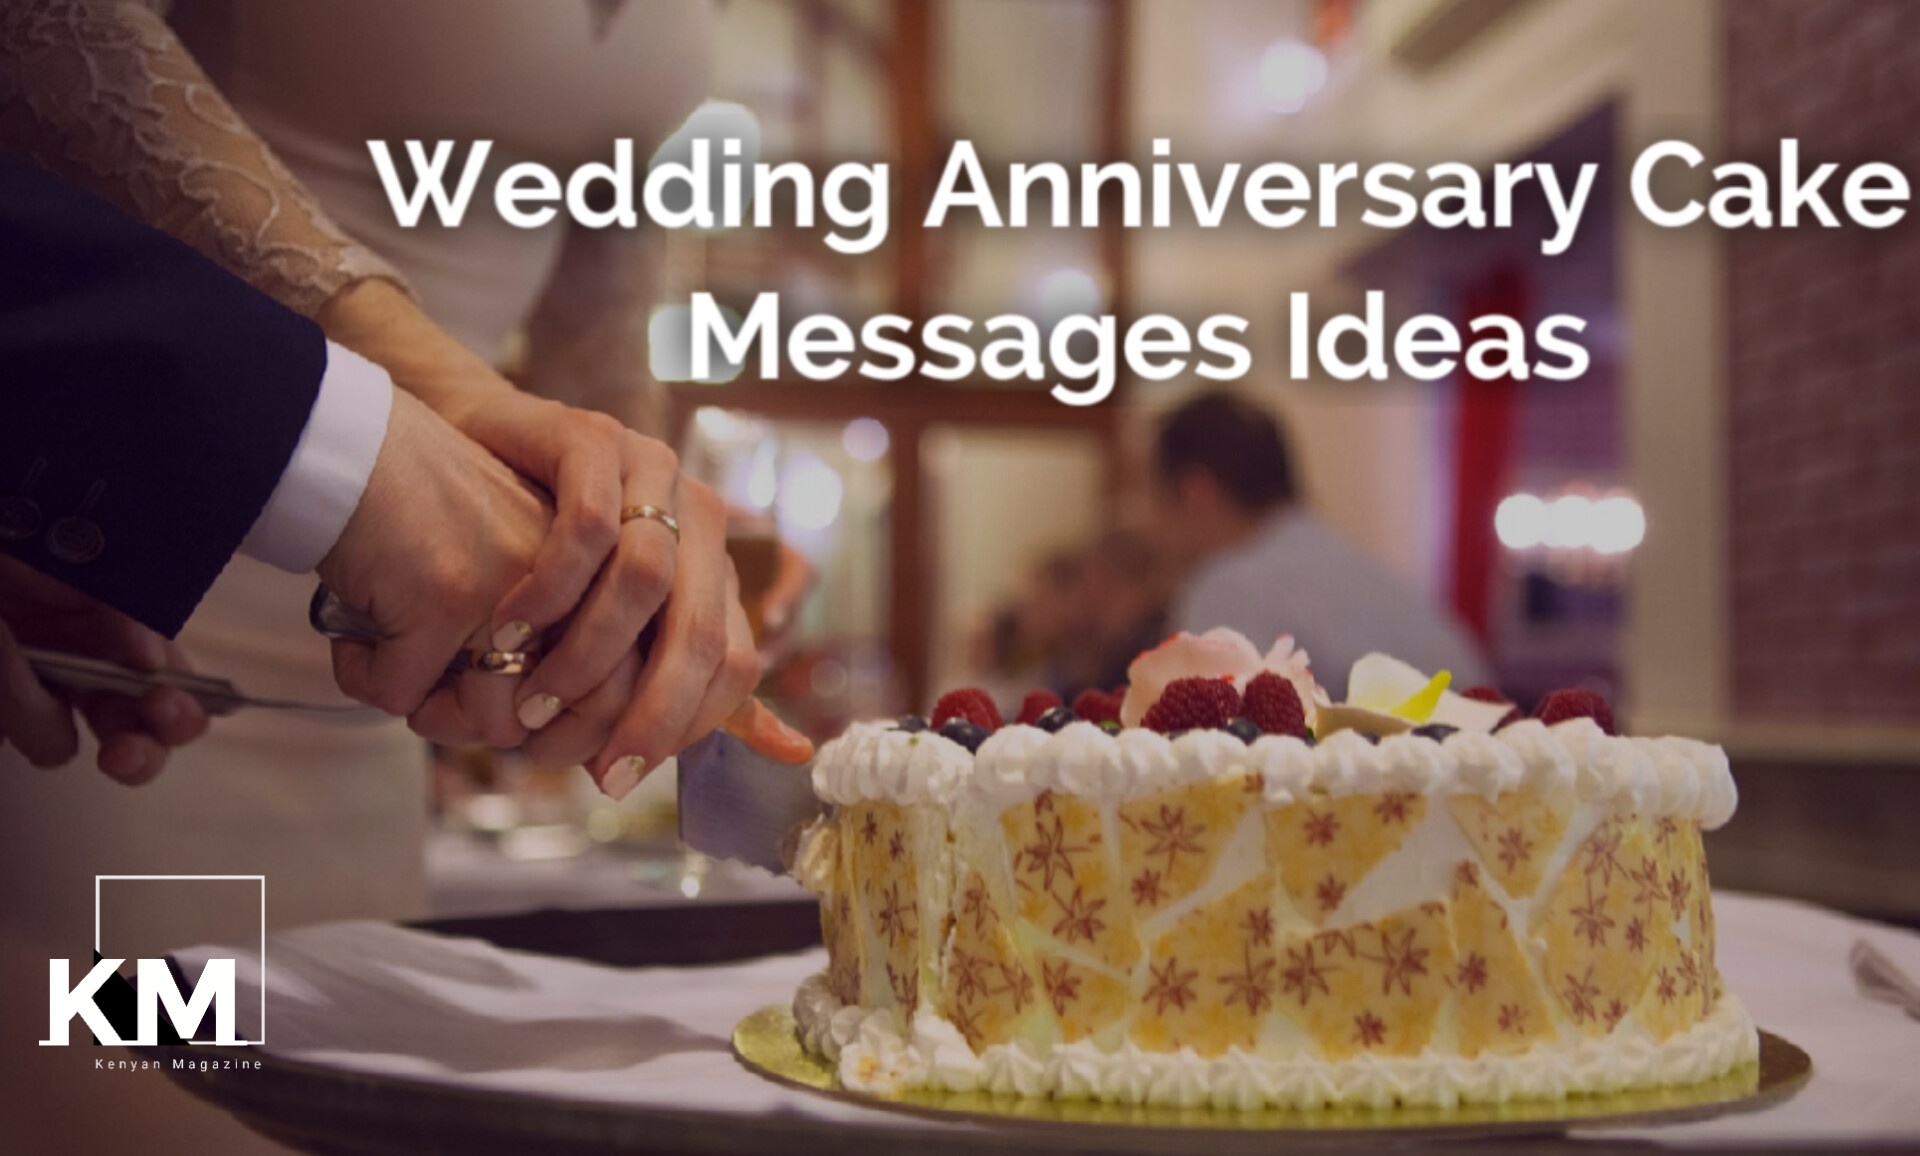 Best Happy Wedding Anniversary Cake With Name | Anniversary cake with name,  Happy anniversary cakes, Happy wedding